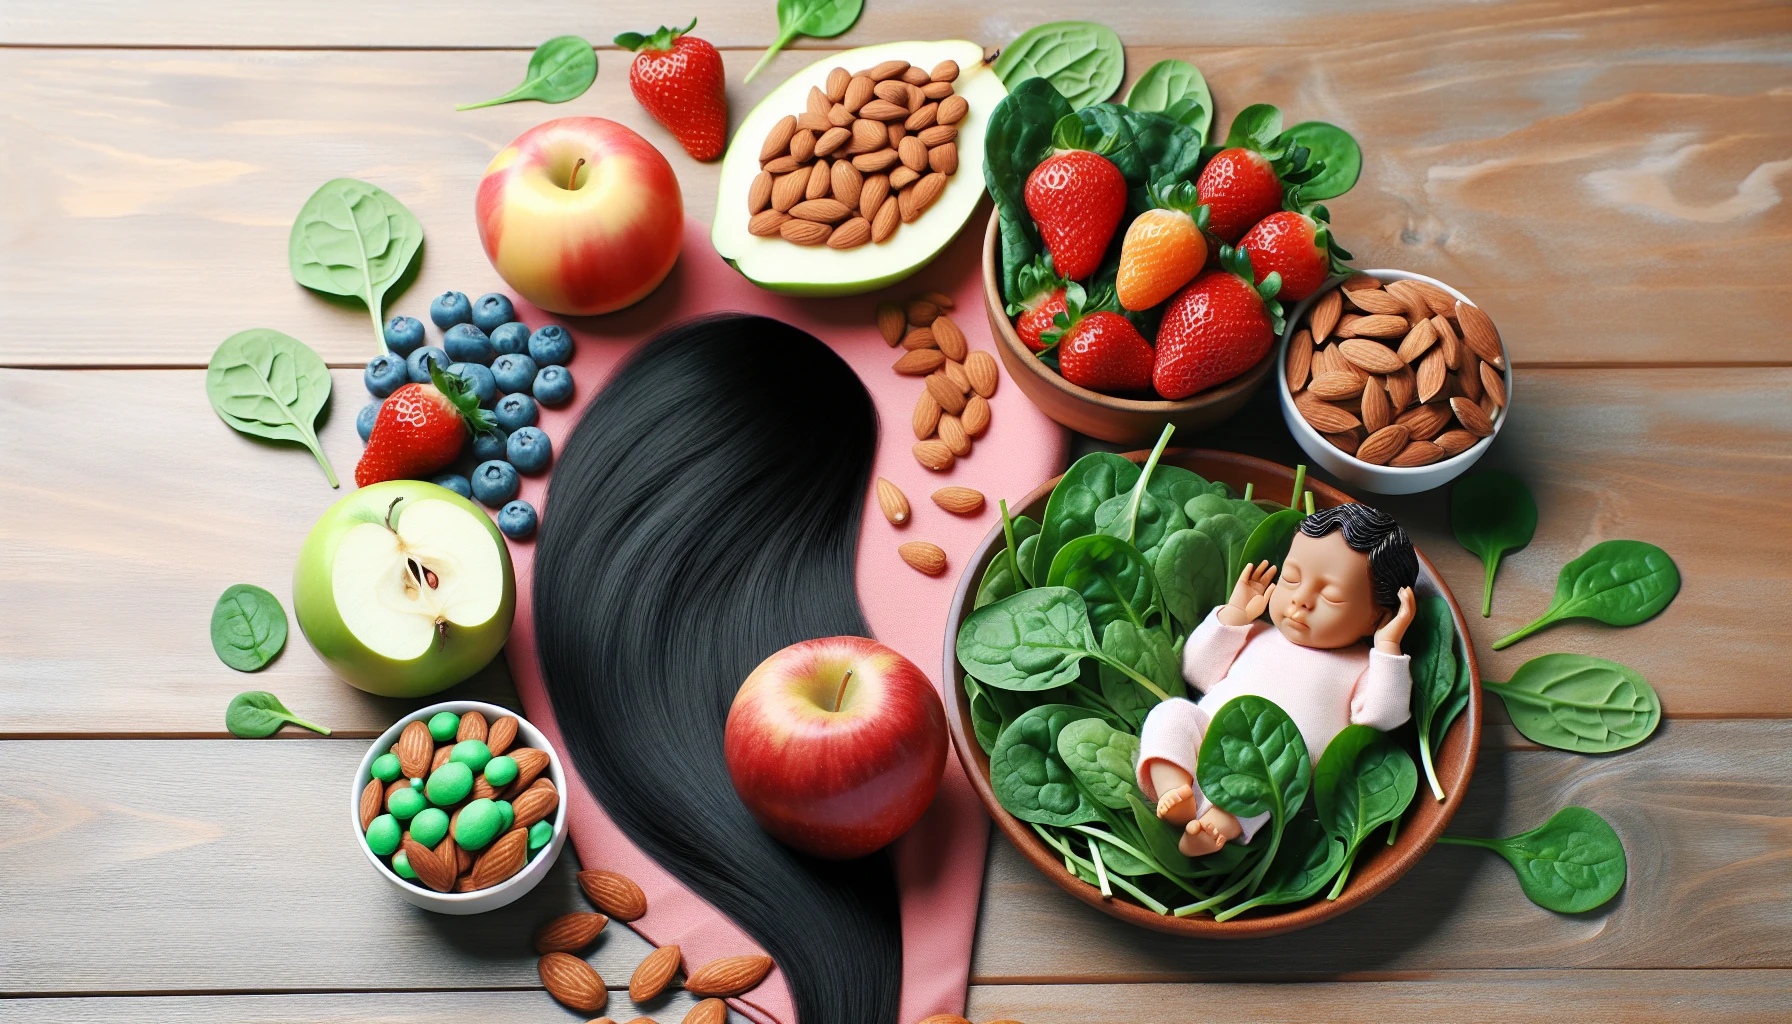 Illustration of various vitamin-rich foods